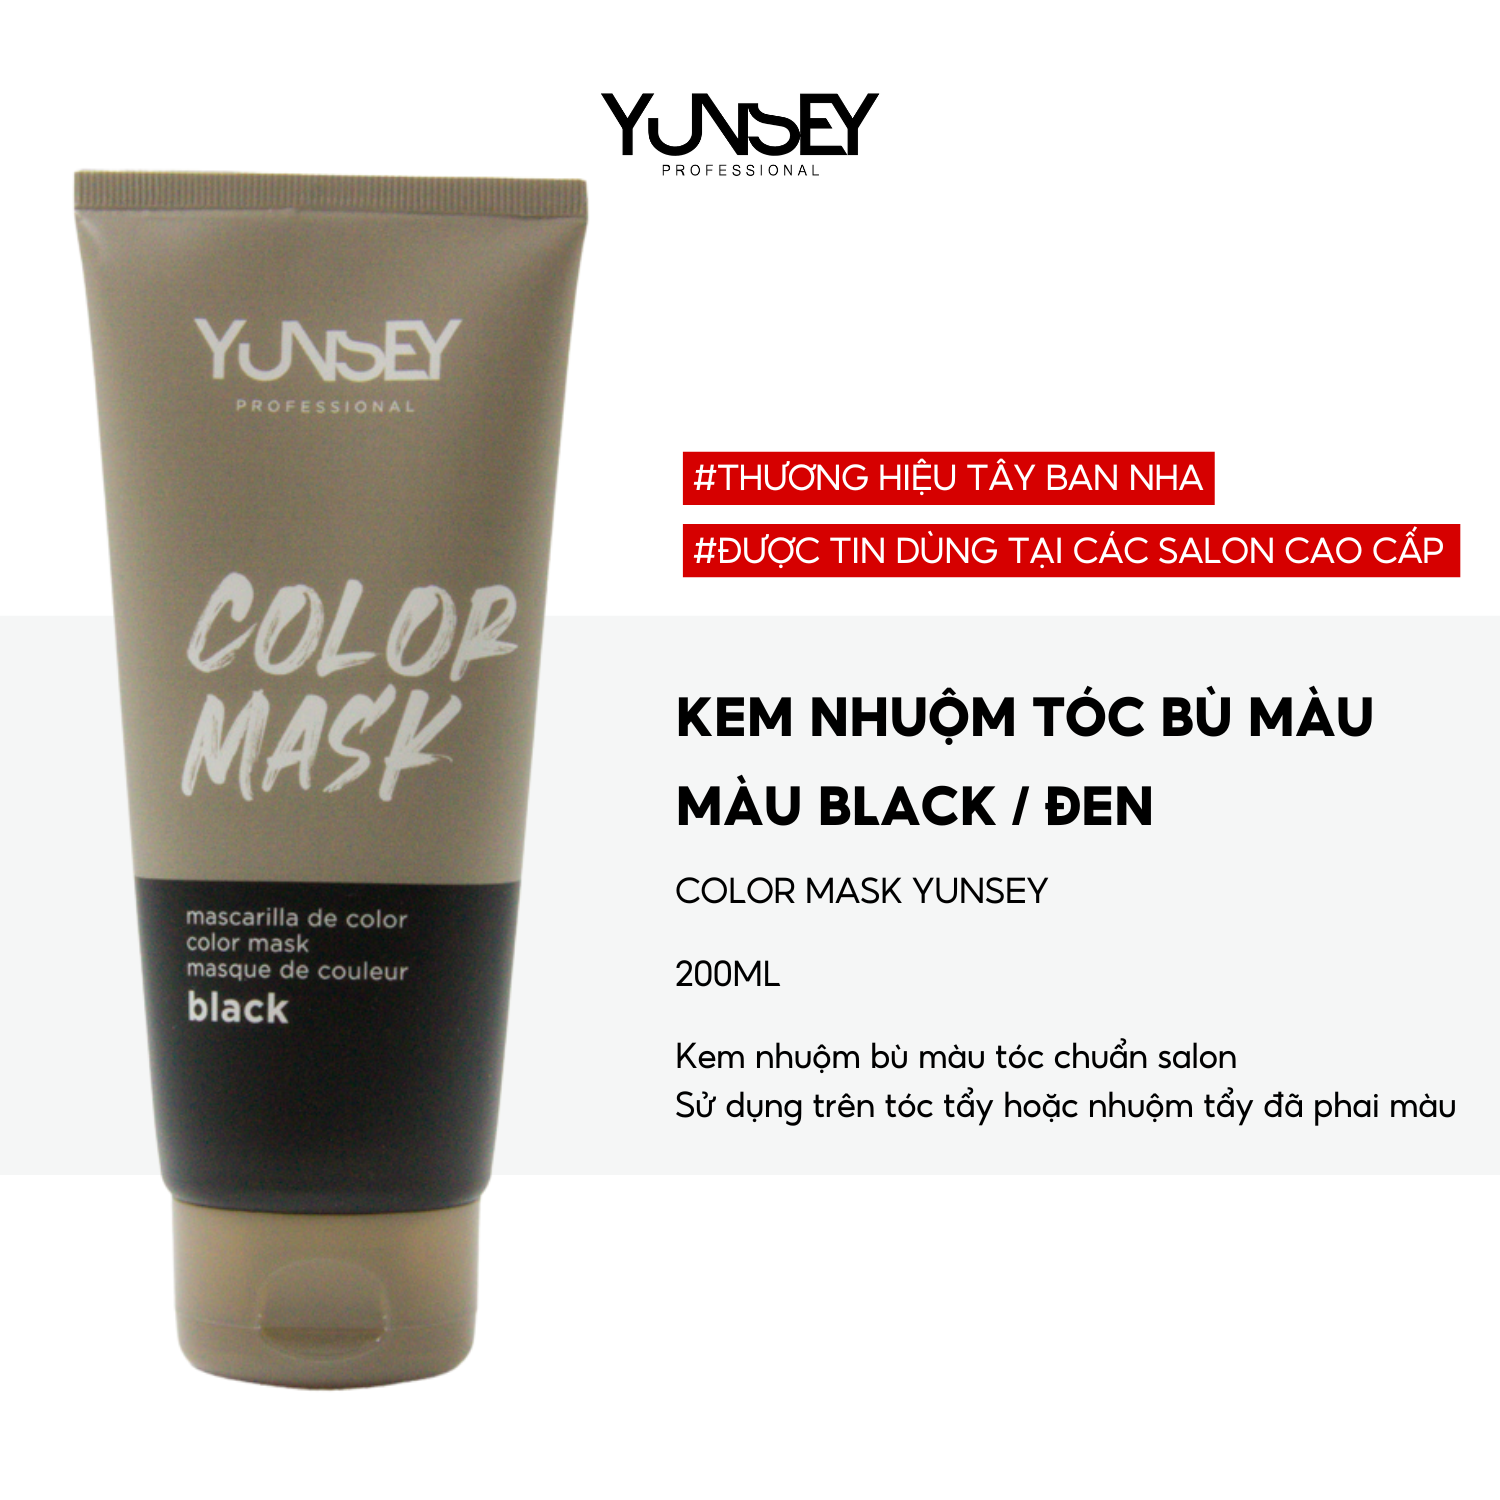 Yunsey Color Mask Mascarillas De Color Vegana 200 ml